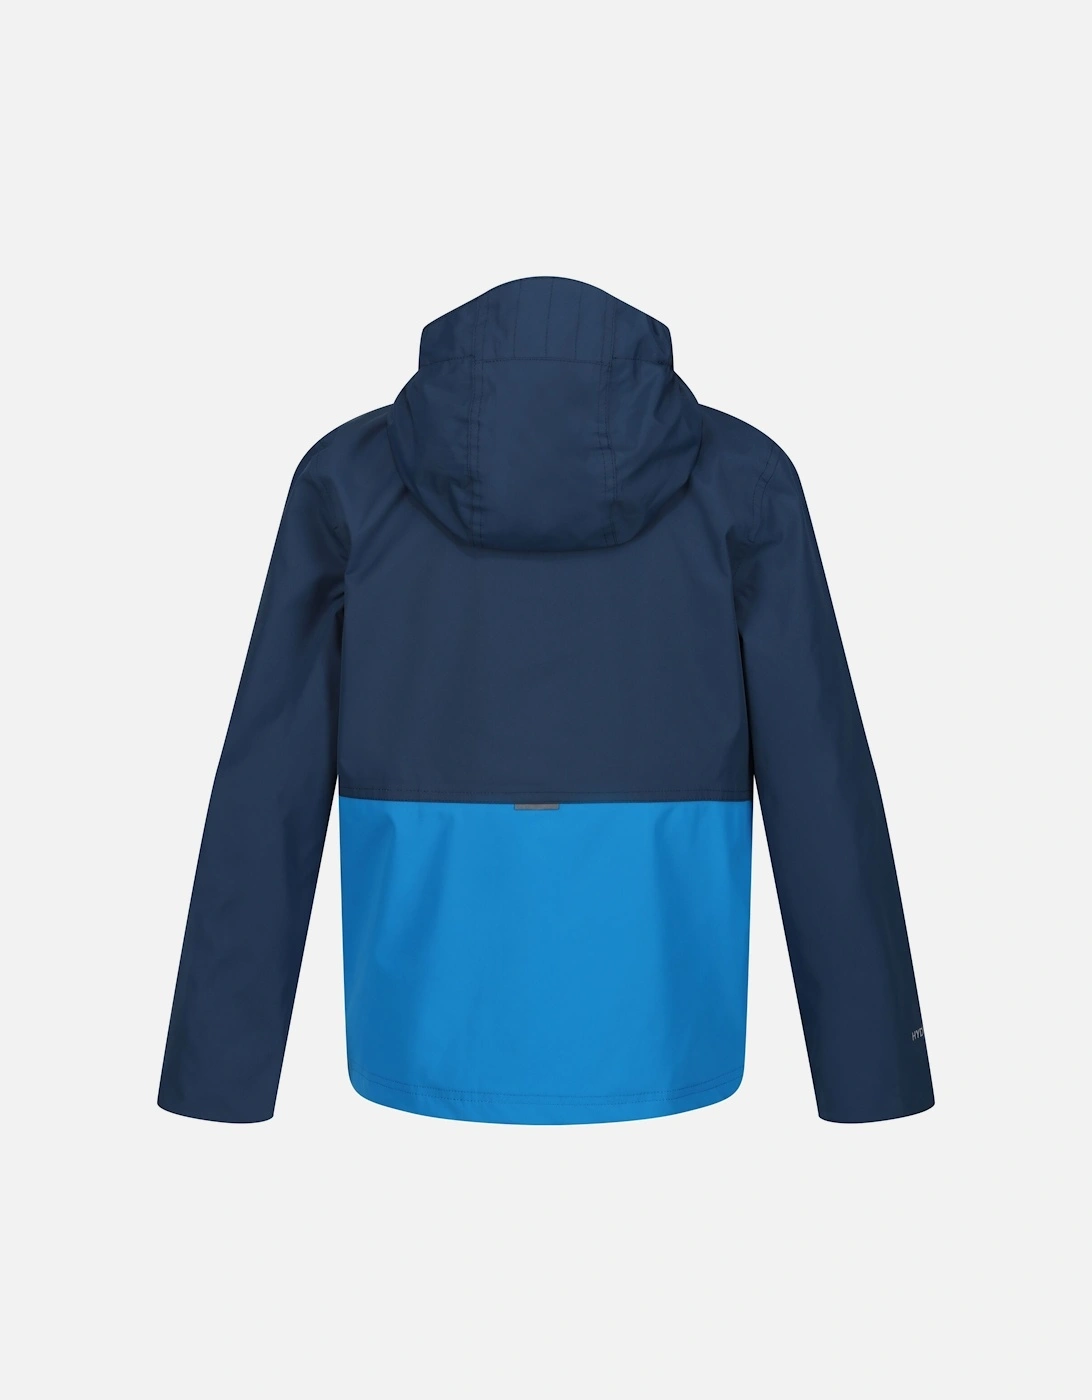 Childrens/Kids Hywell Waterproof Jacket